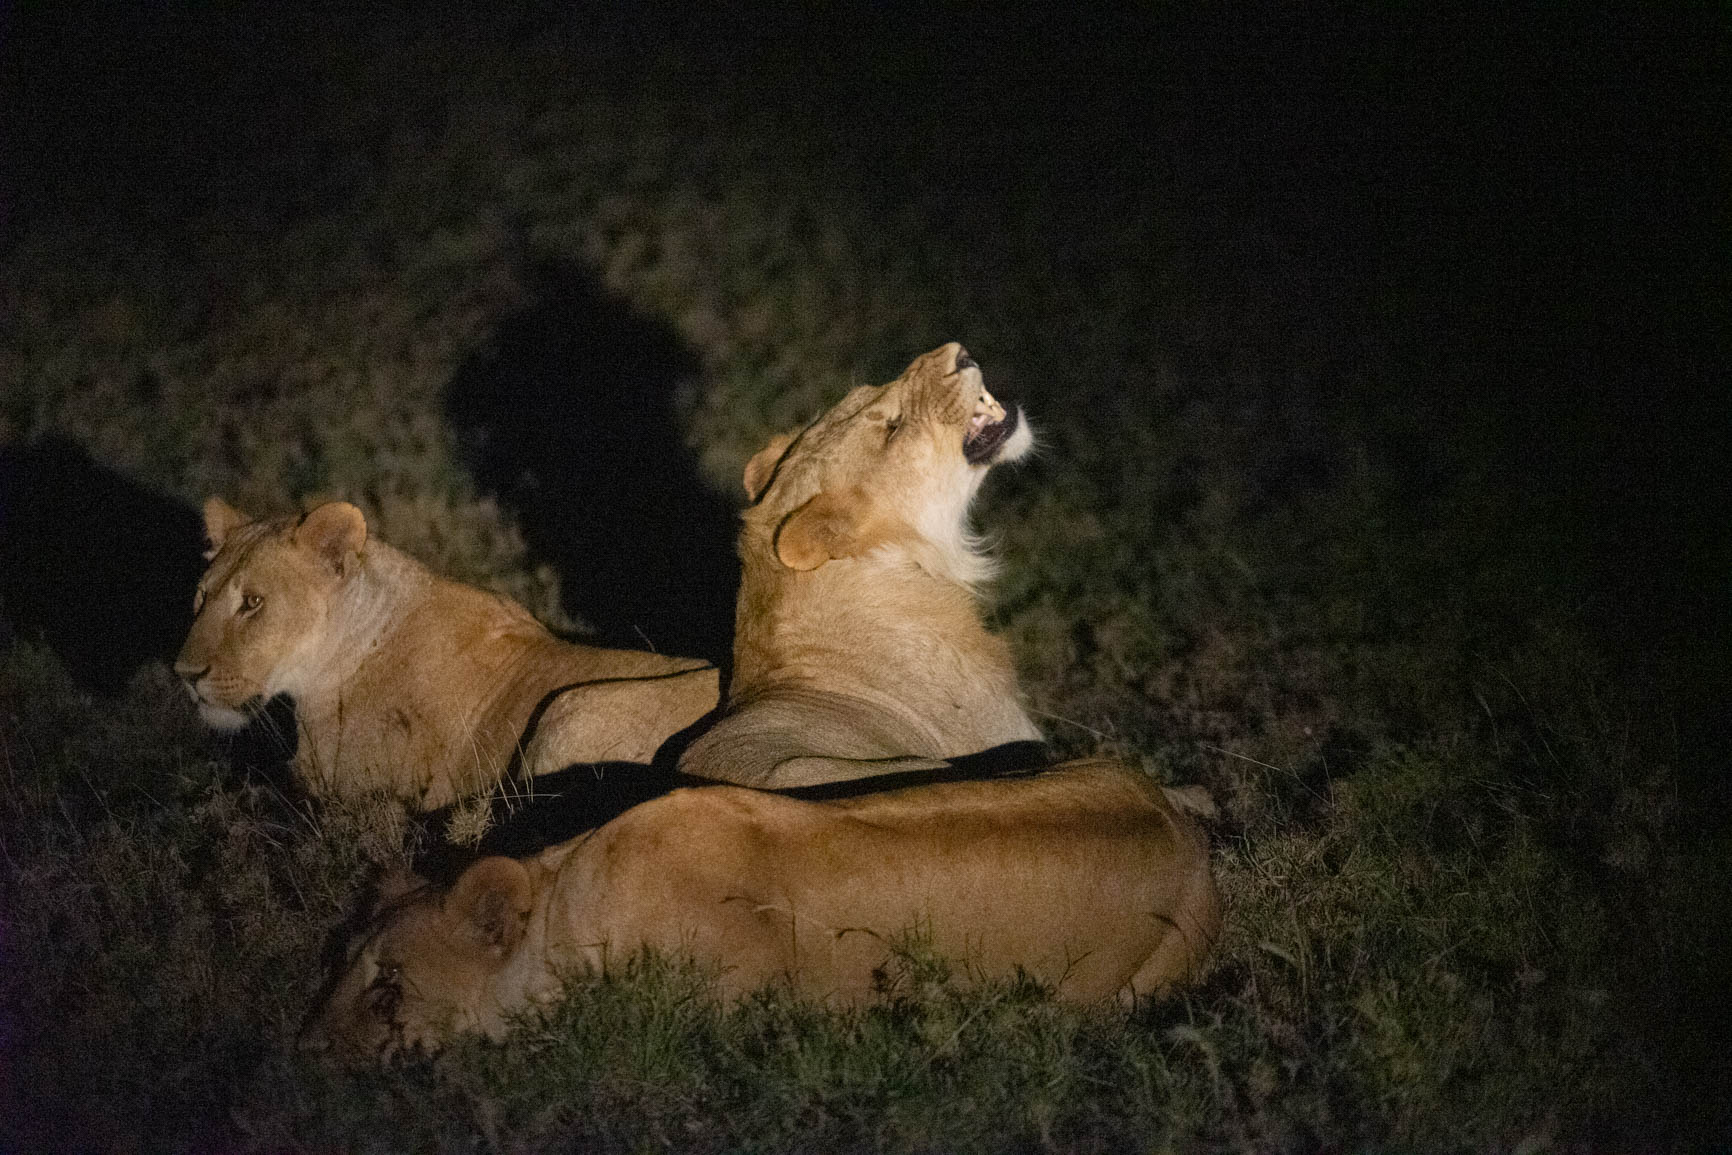 Kenya wildlife safari night game